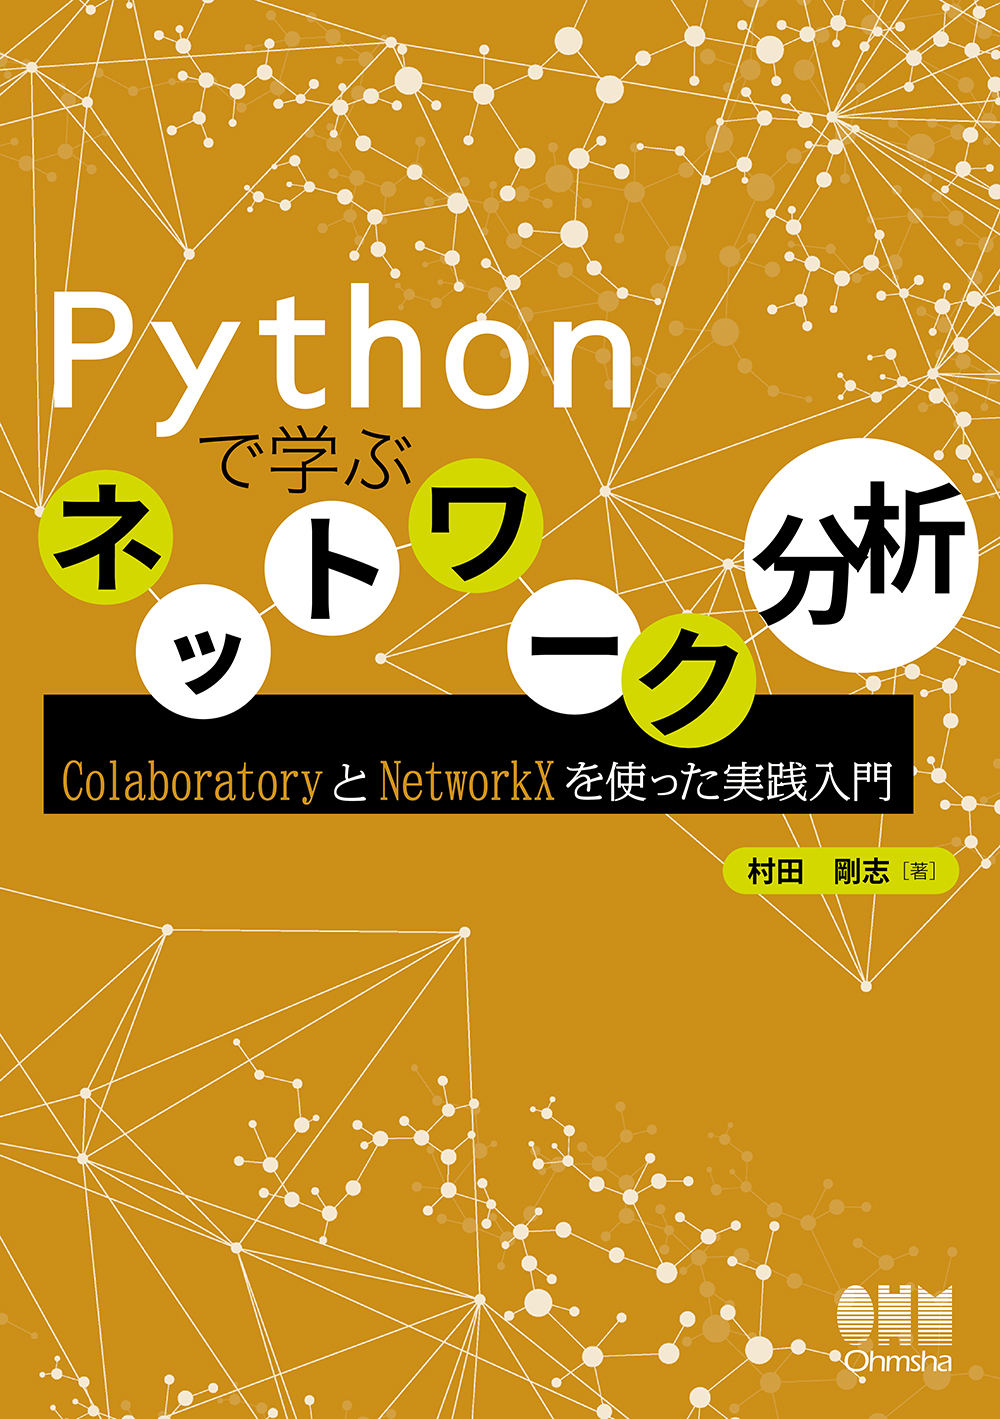 Pythonで学ぶネットワーク分析の商品画像